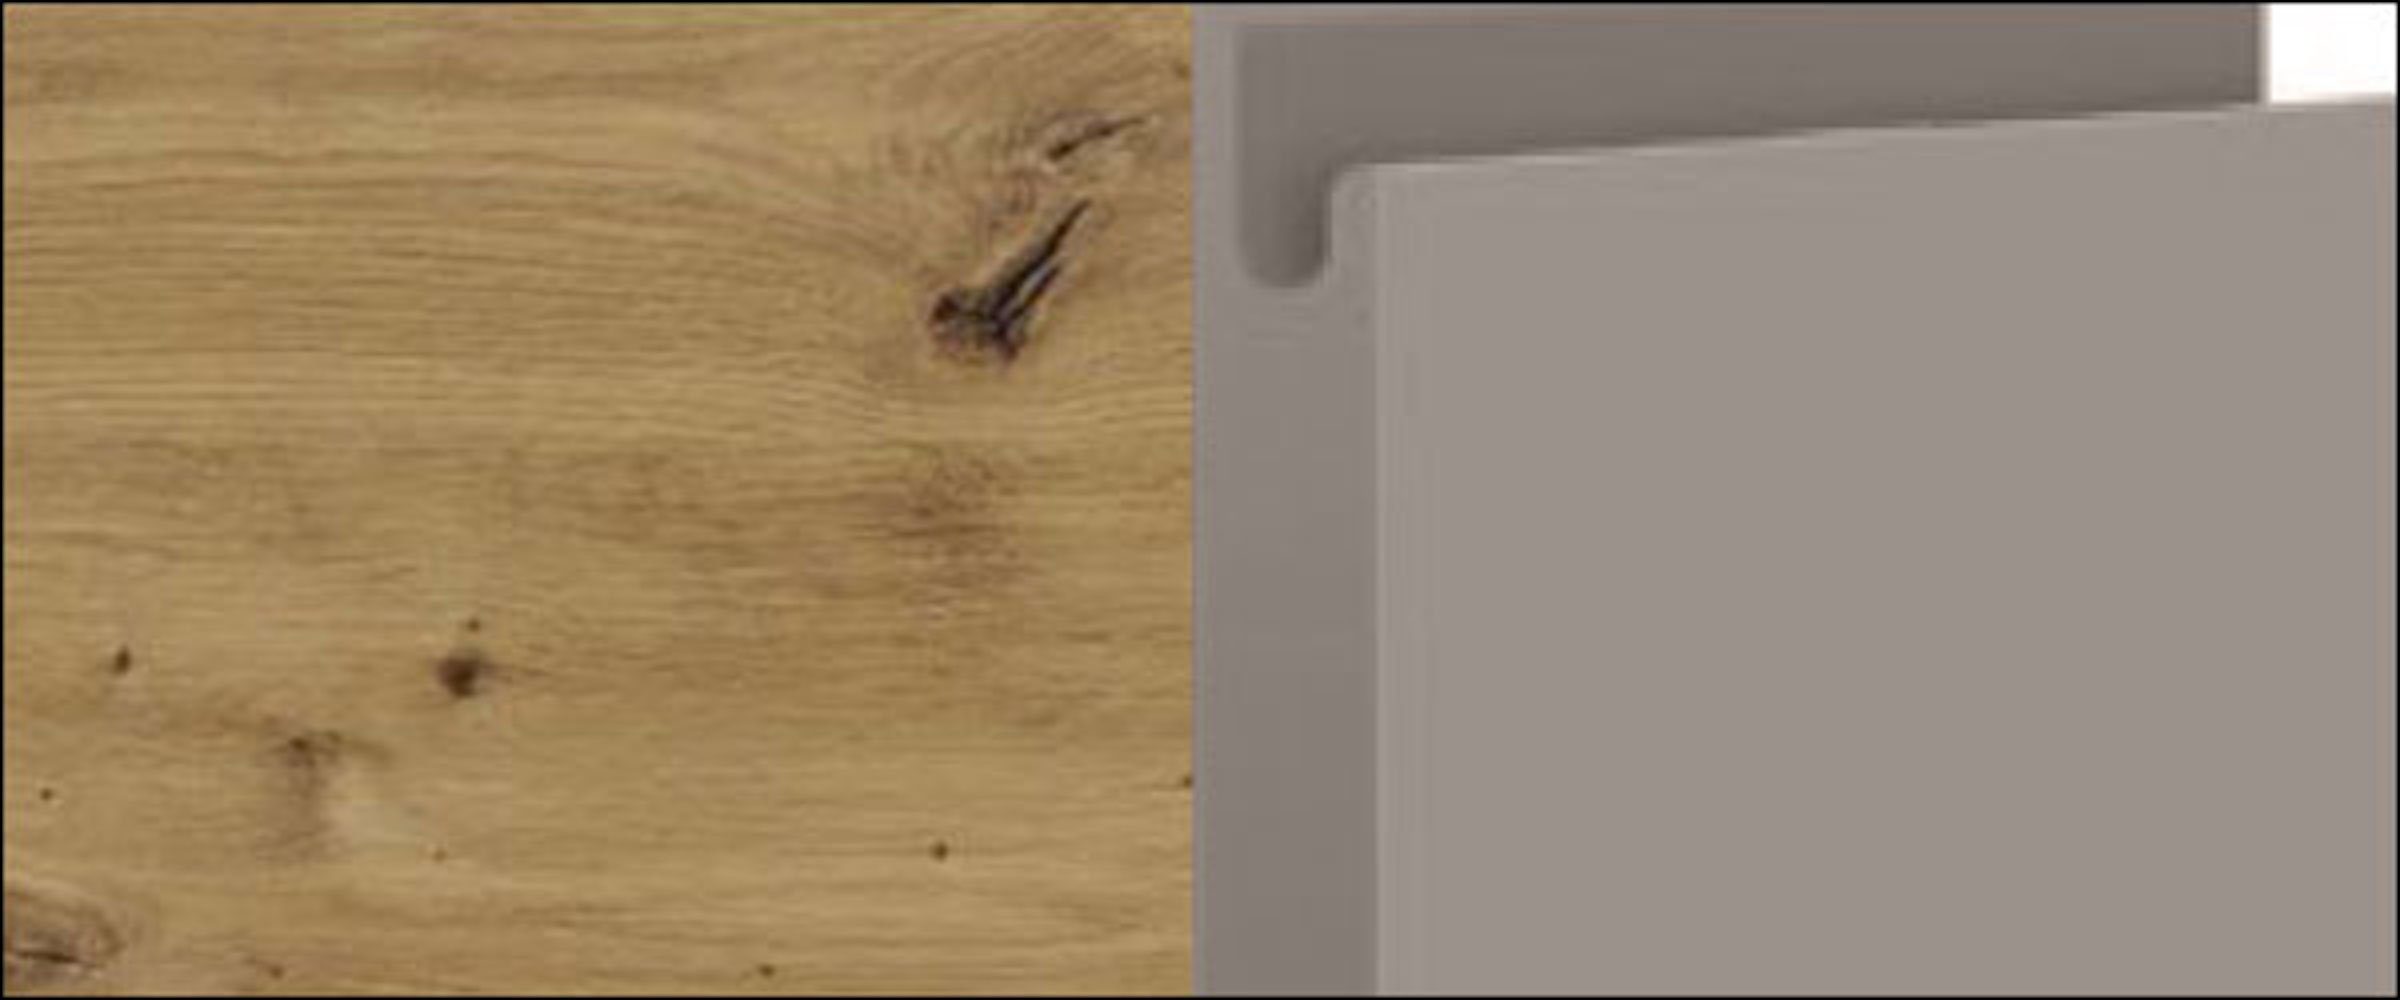 Korpusfarbe Feldmann-Wohnen wählbar Schublade grifflos grey Front- Acryl (Teilauszug) 60cm & 1 Avellino Spülenunterschrank matt stone